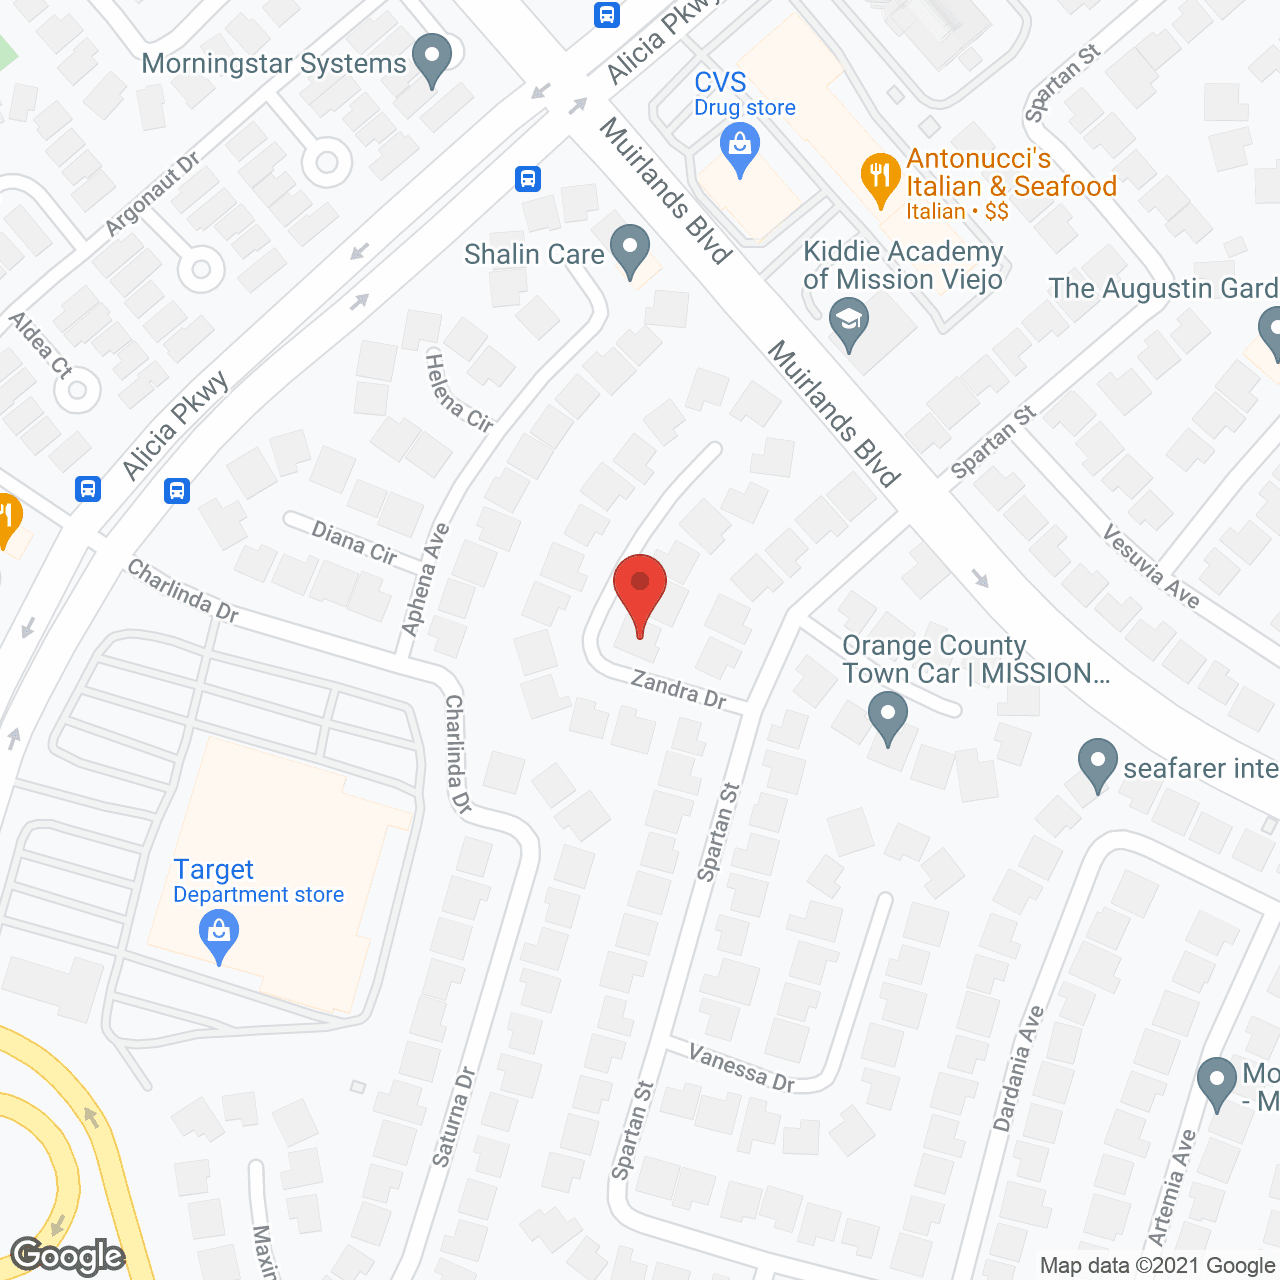 Vest Care Manor in google map